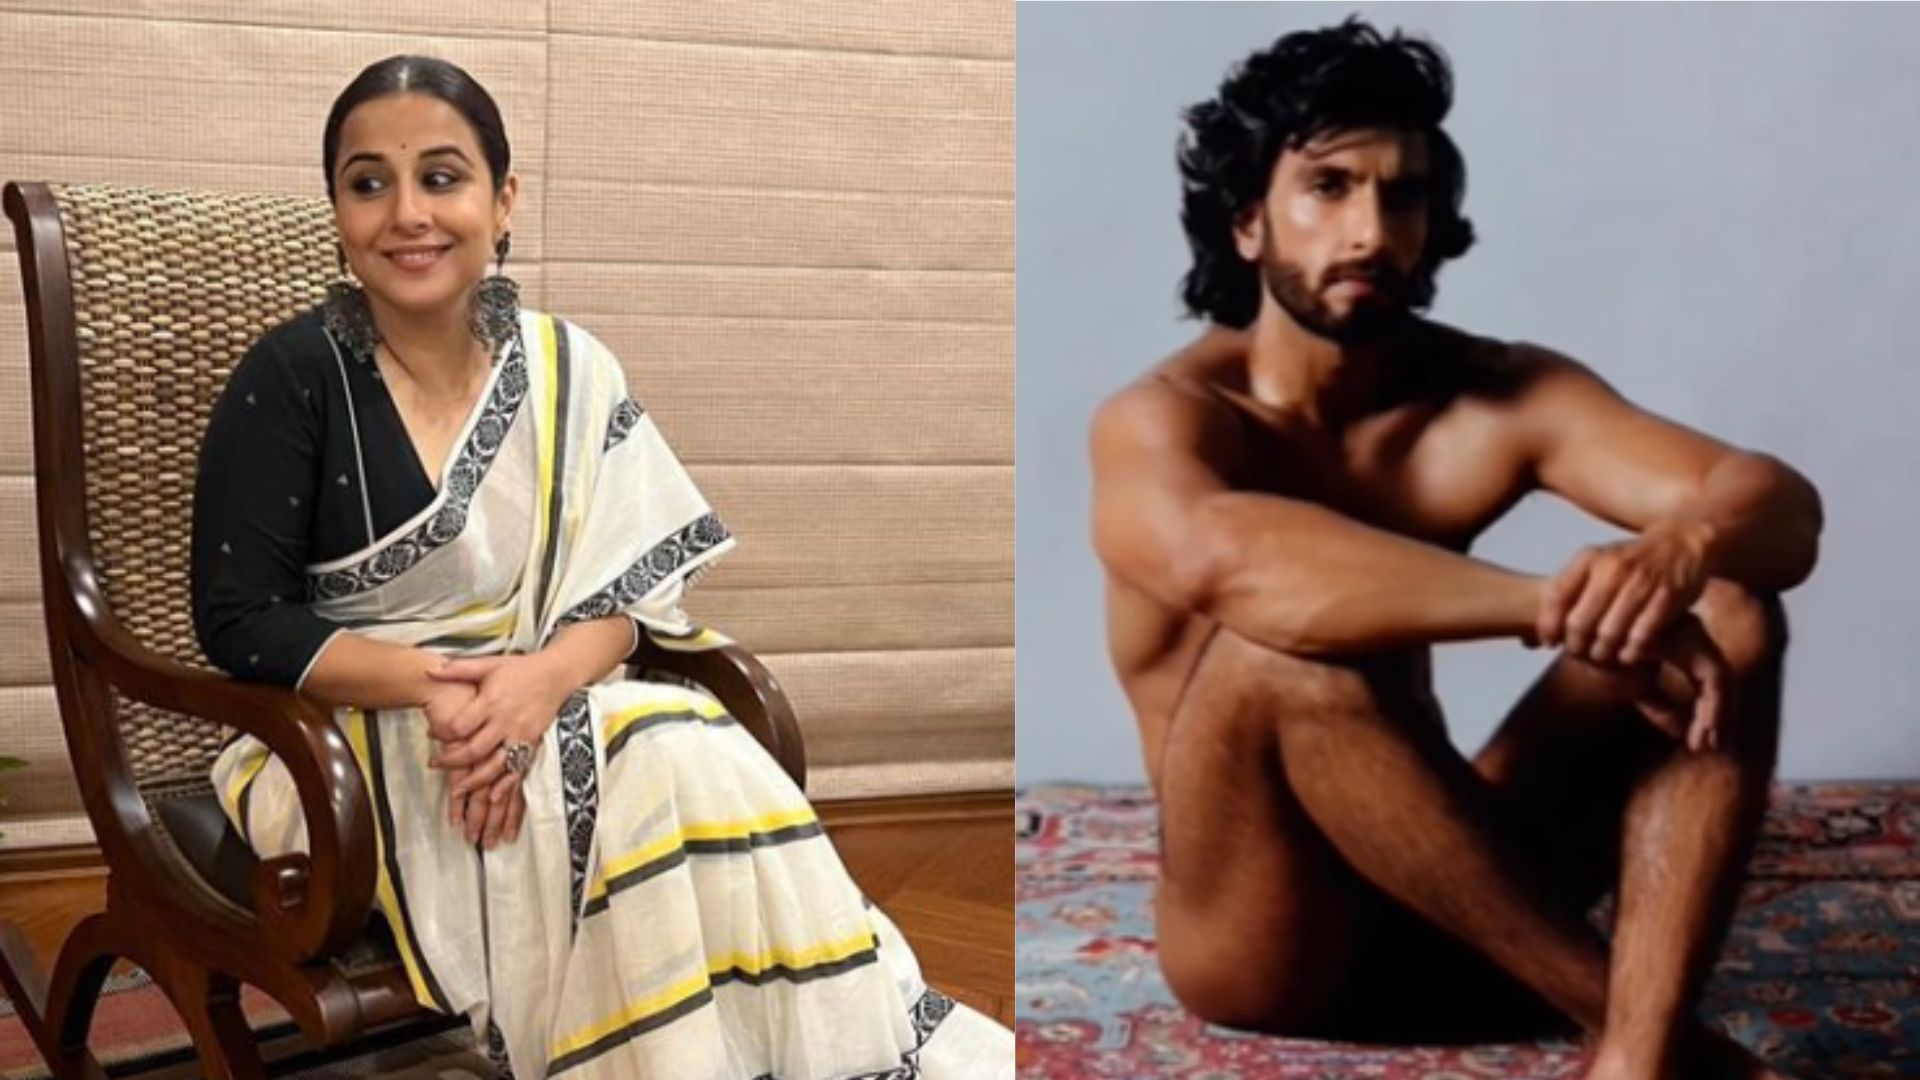 Vidya Balan Has A Sassy Response For Haters Of Ranveer's Nude Photos